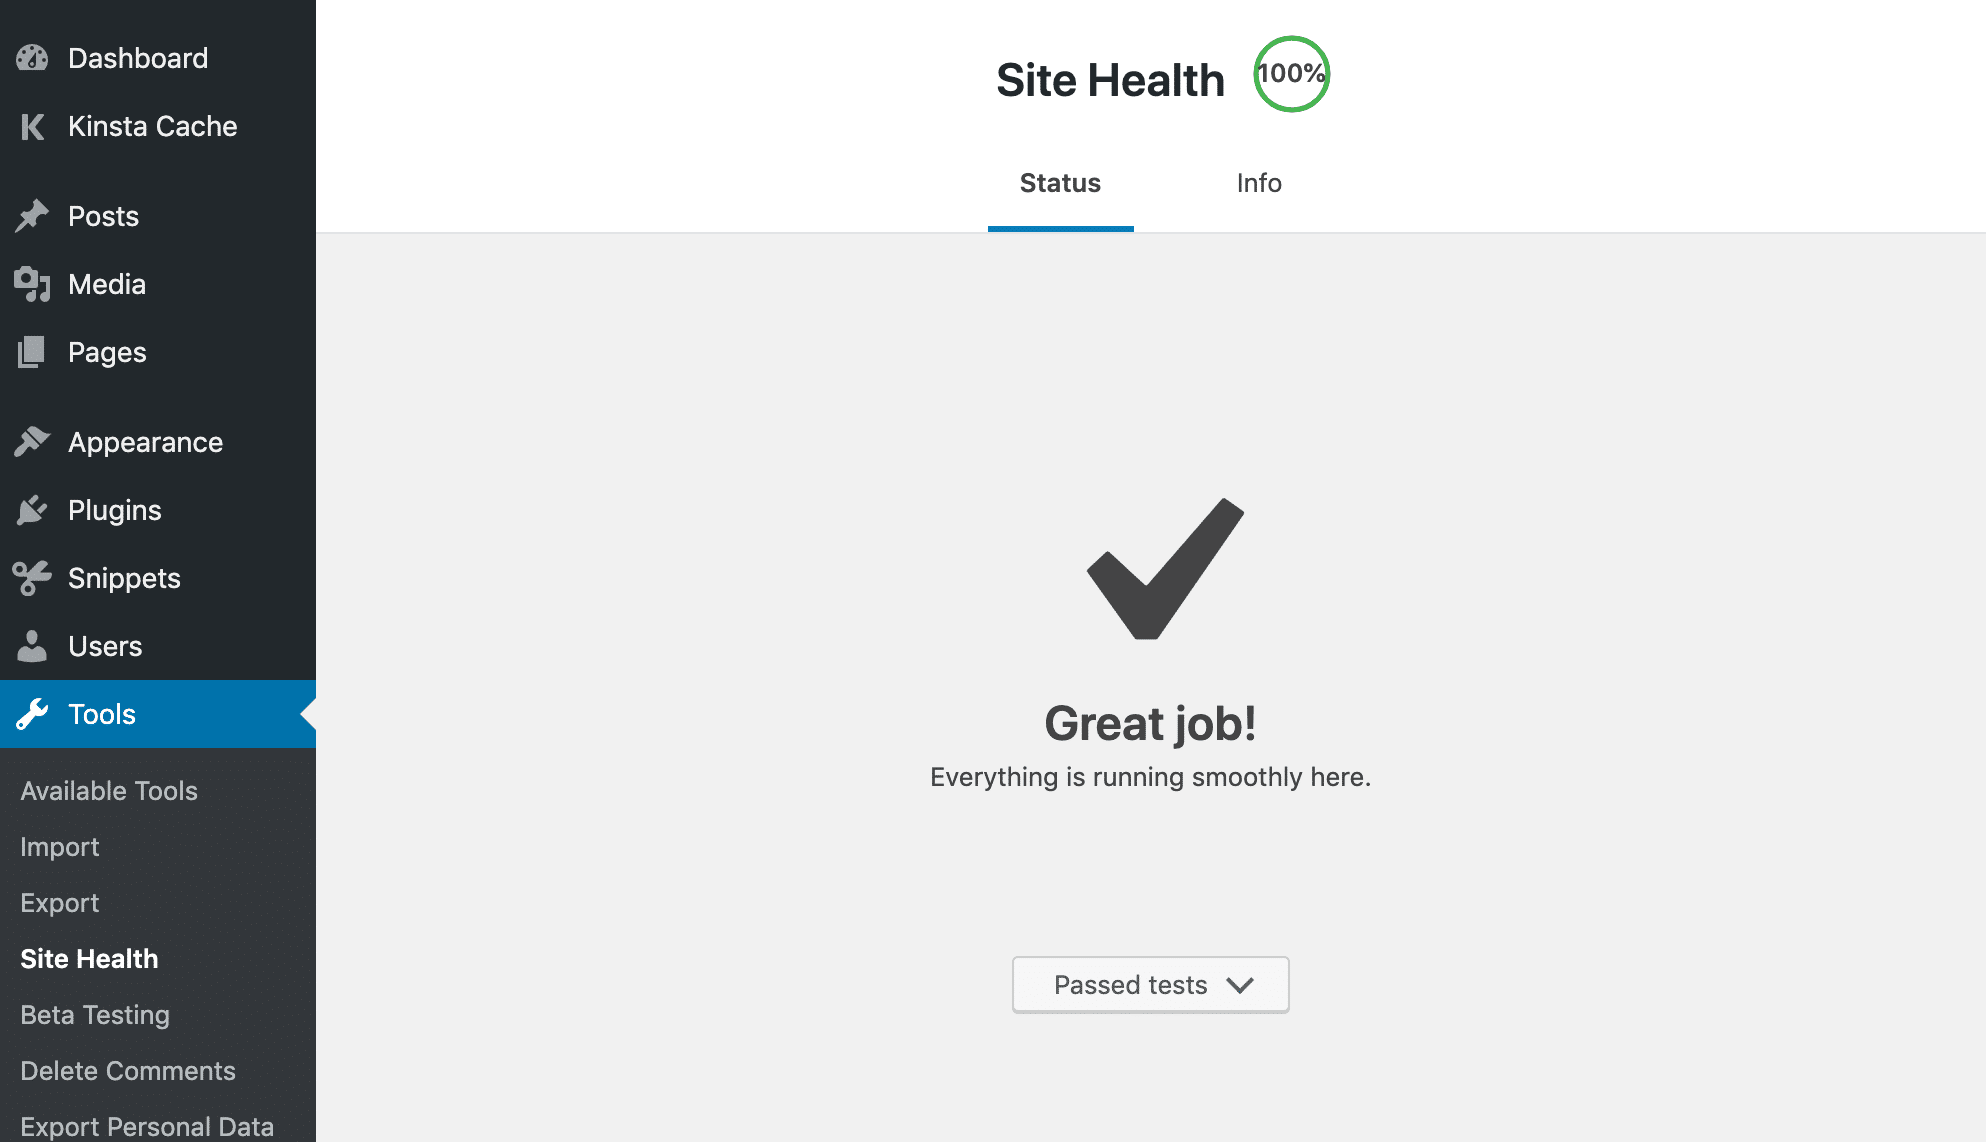 Site Health tool in WordPress - 100% score